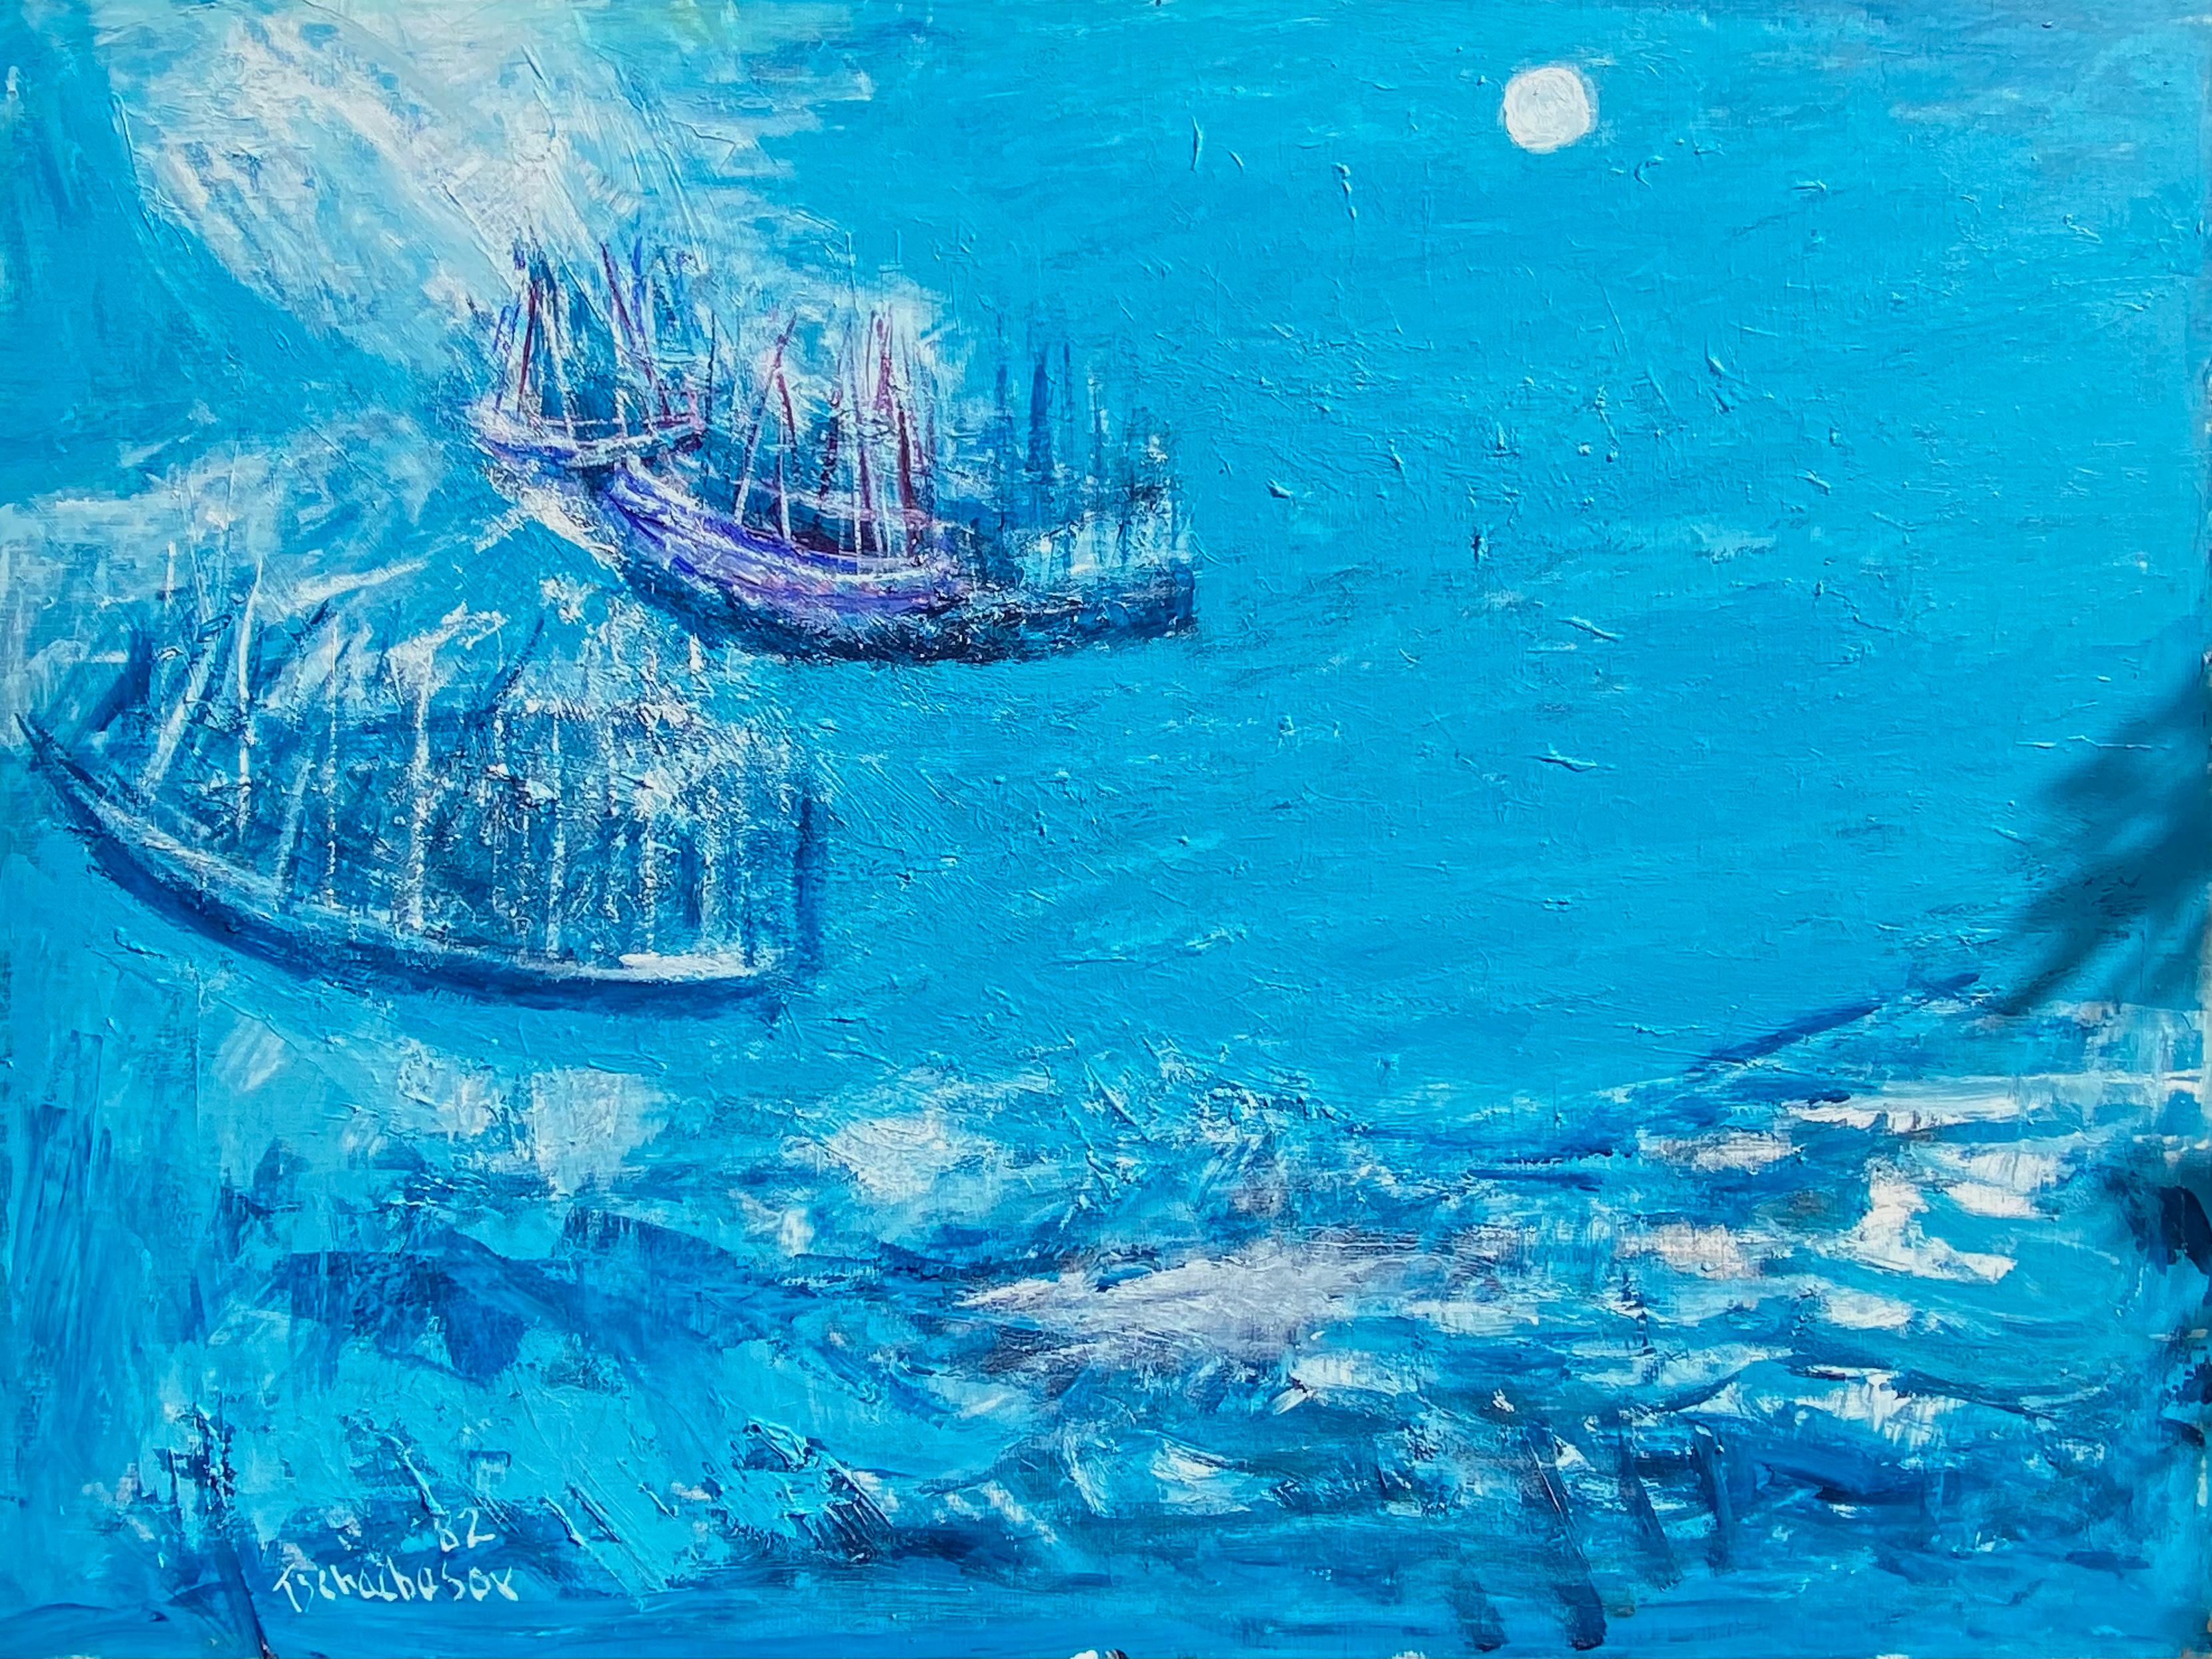 “Moonlight Sail” - Painting by Nahum Tschacbasov